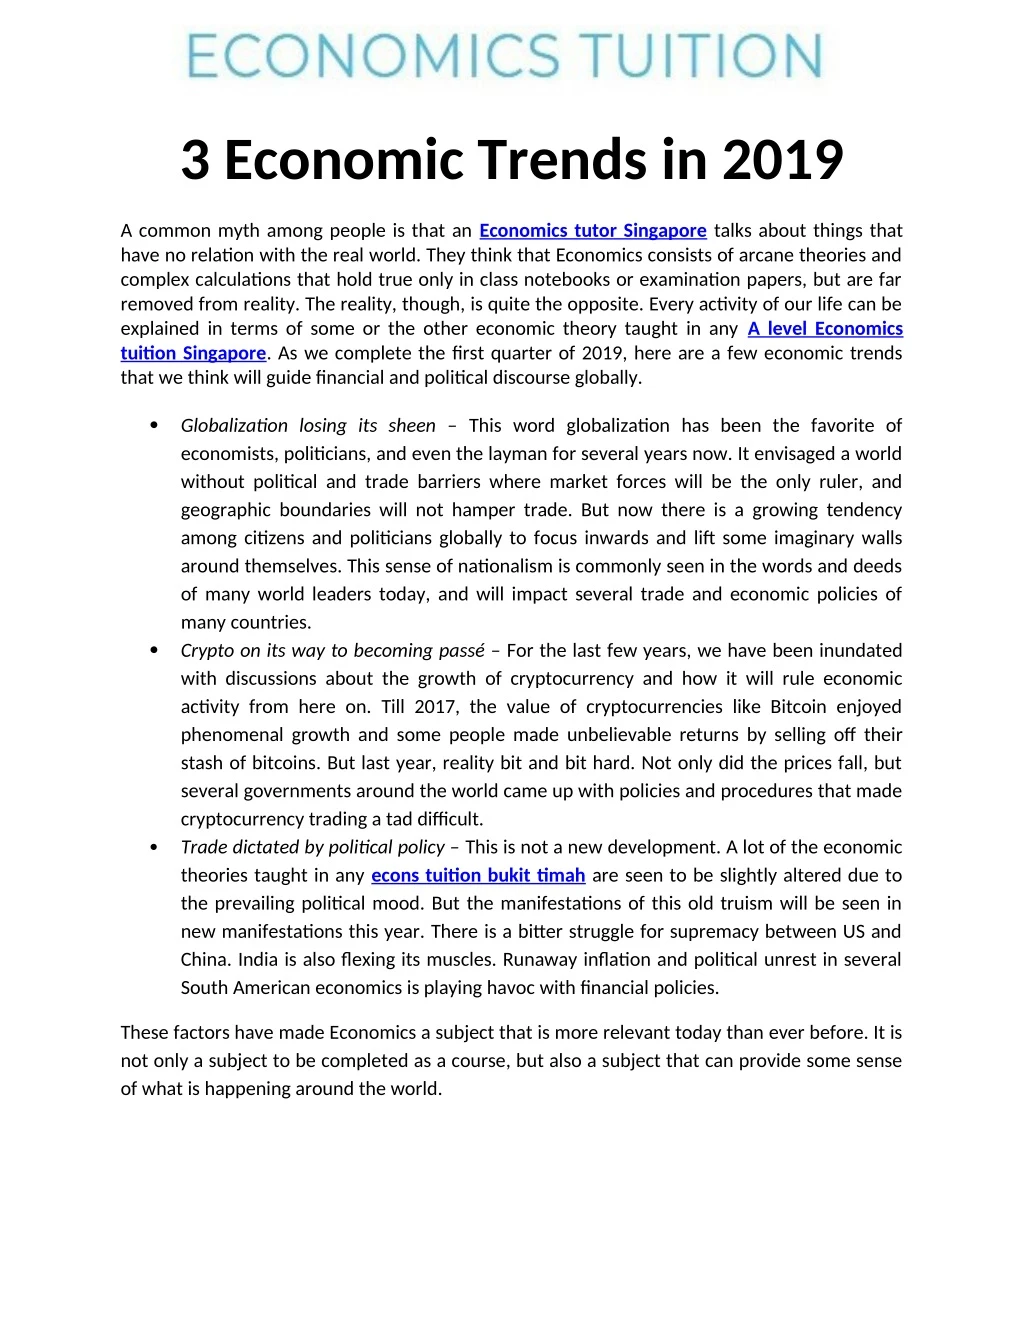 3 economic trends in 2019